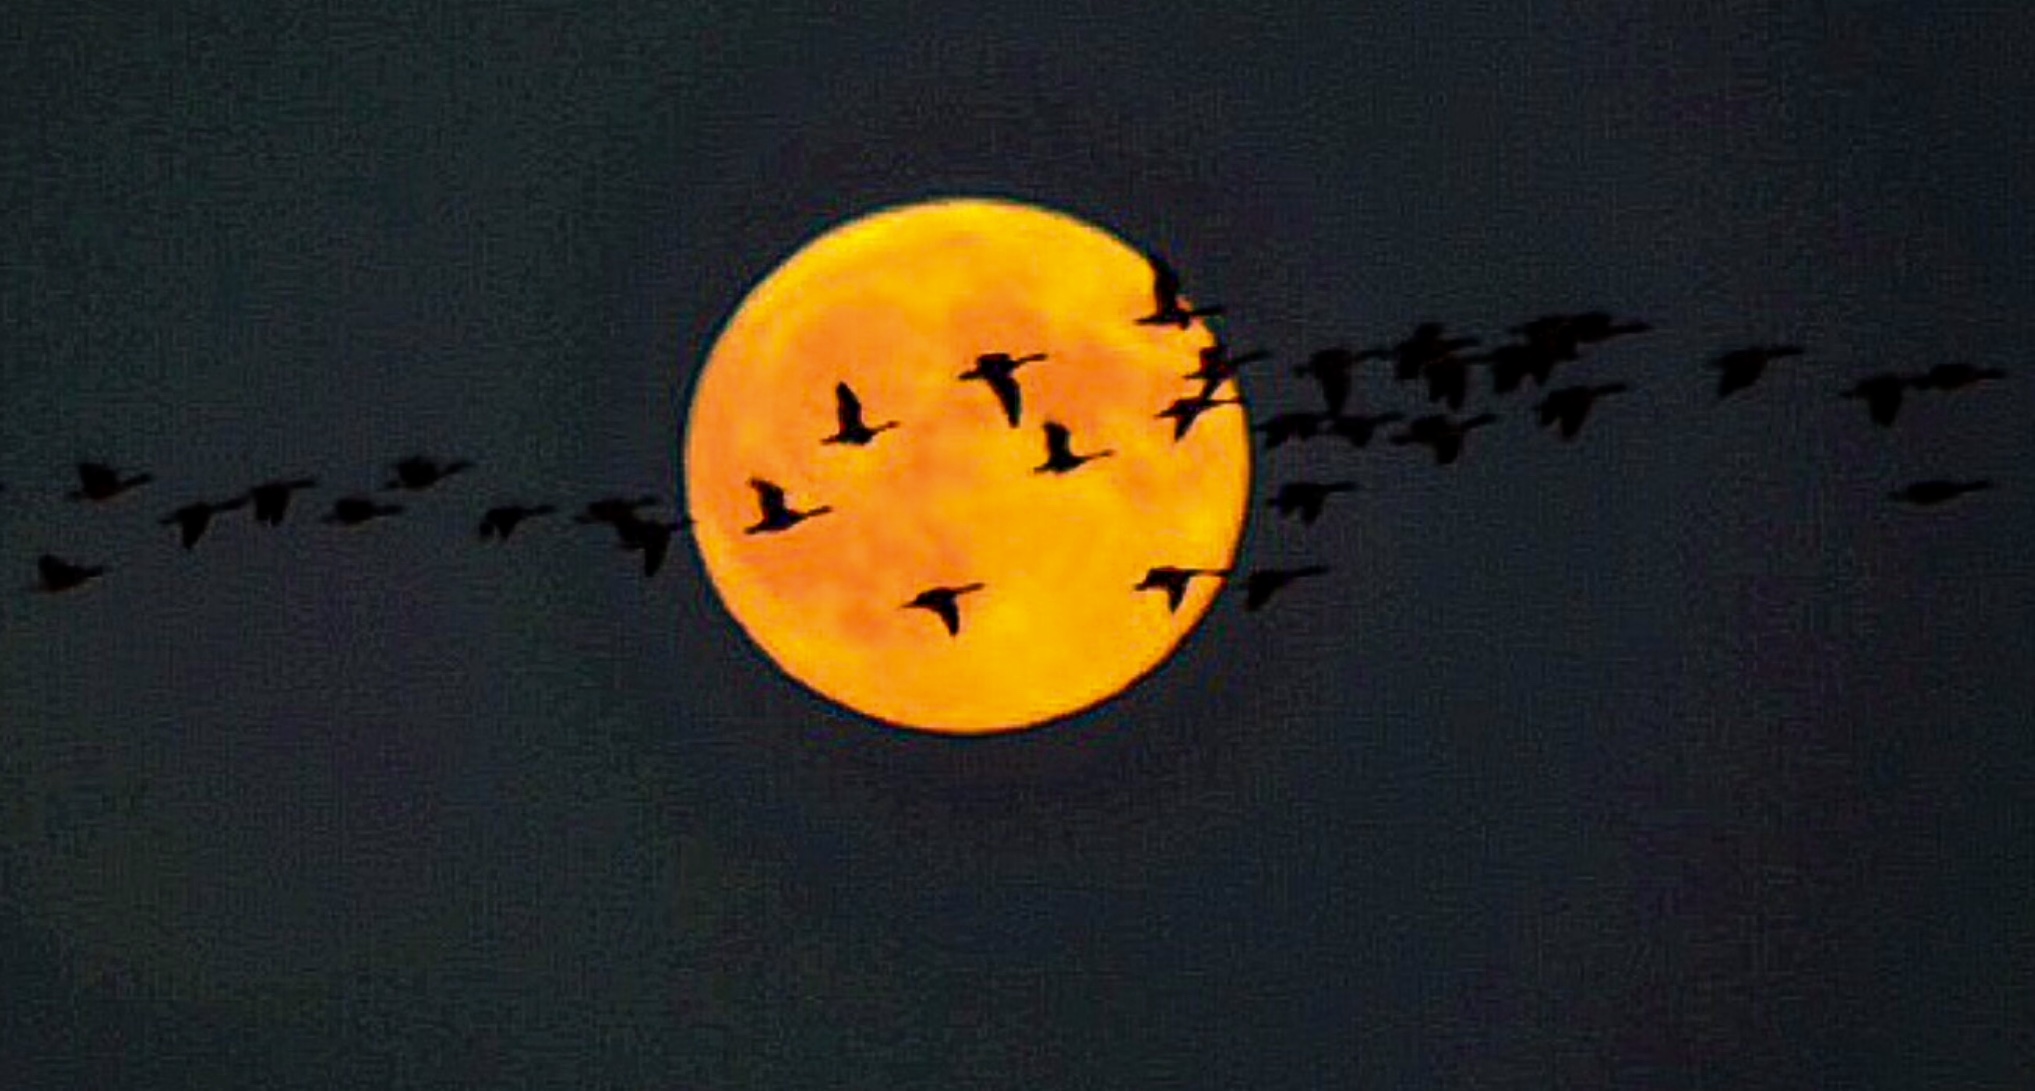 Full Moon and Geese.jpg